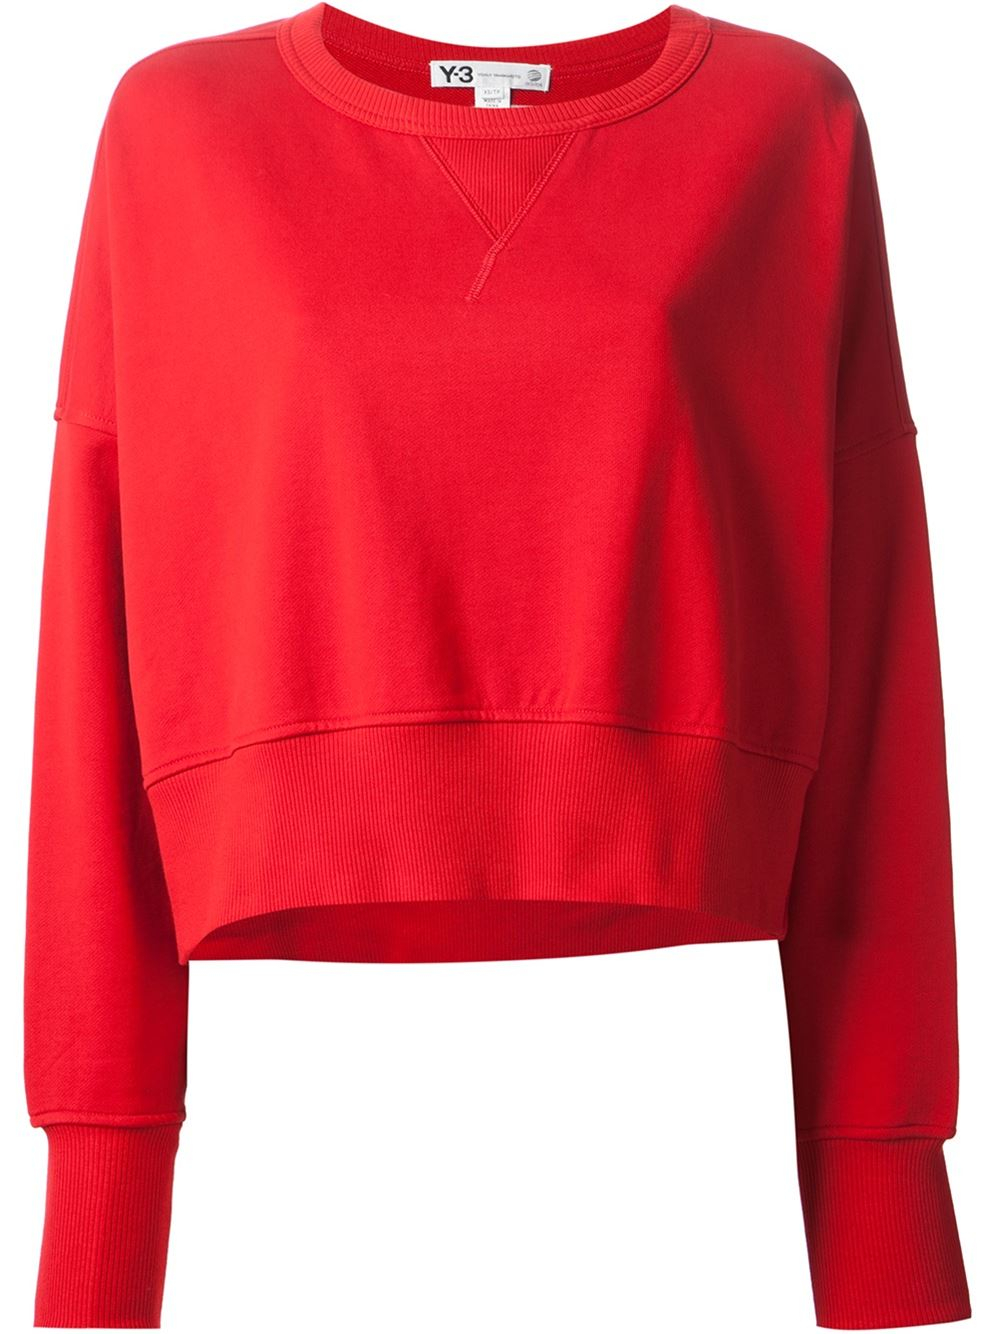 Lyst - Y-3 Cropped Sweatshirt in Red